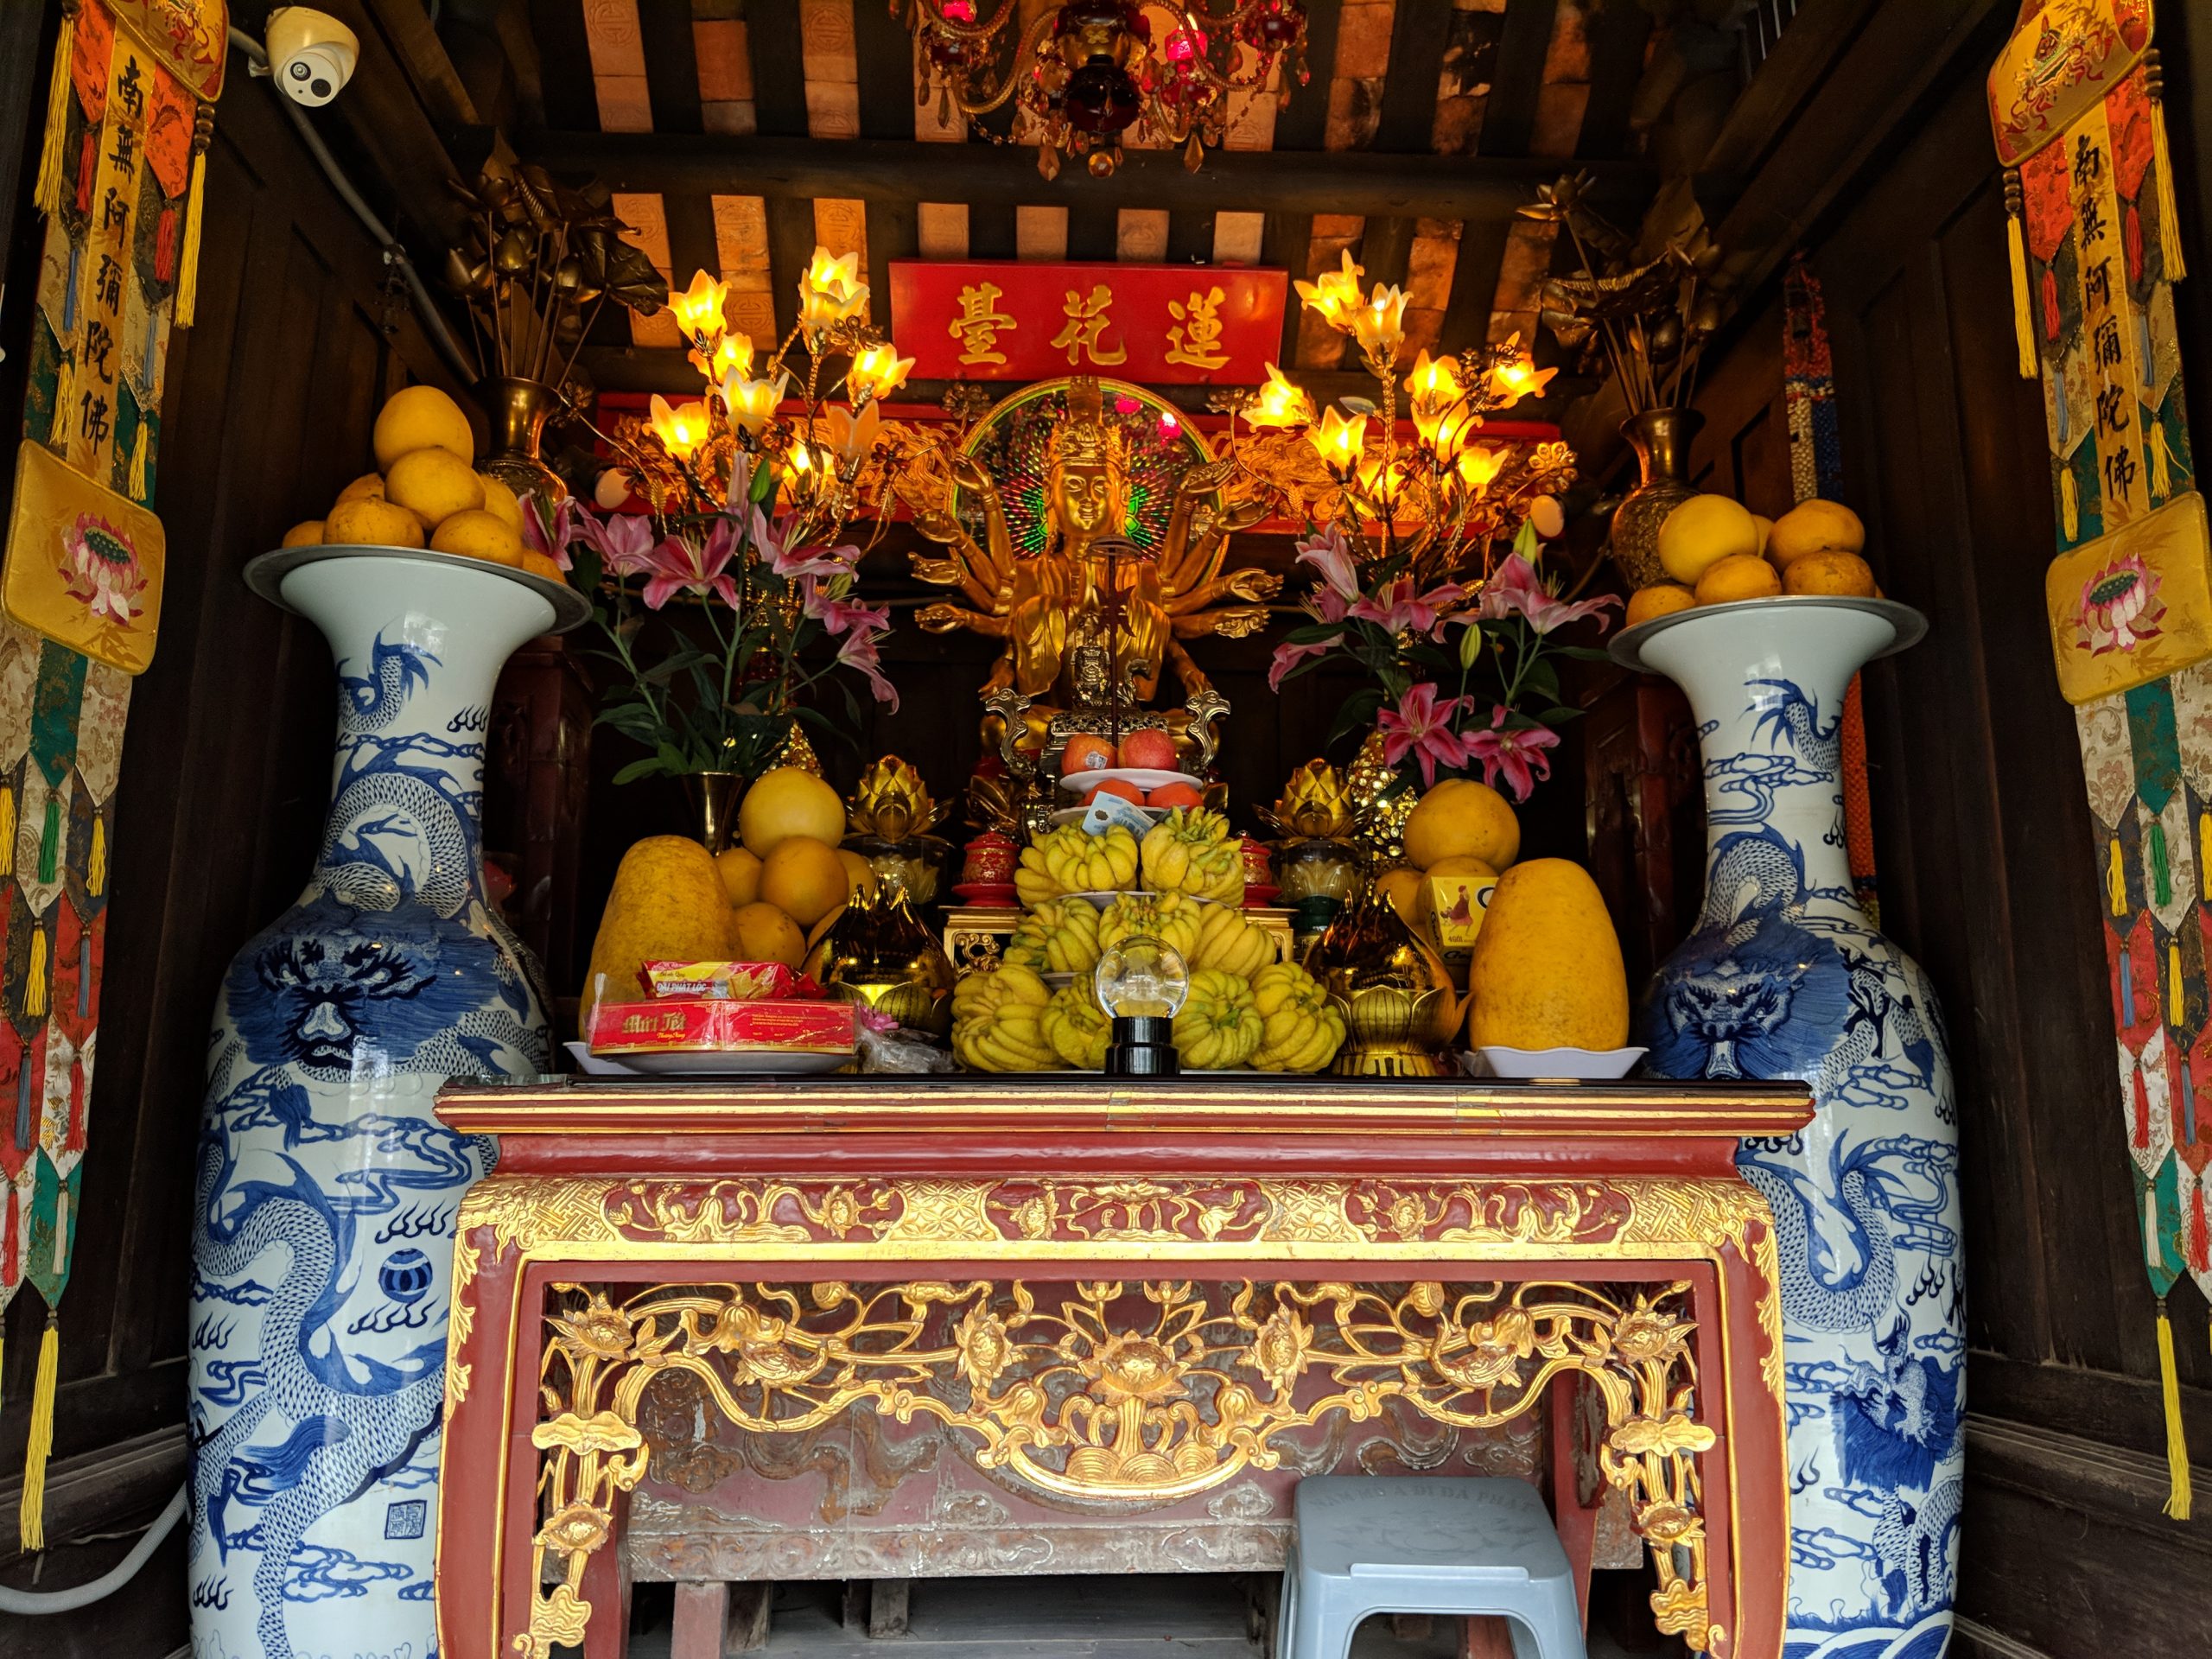 A colorful shrine in Hanoi, Vietnam.